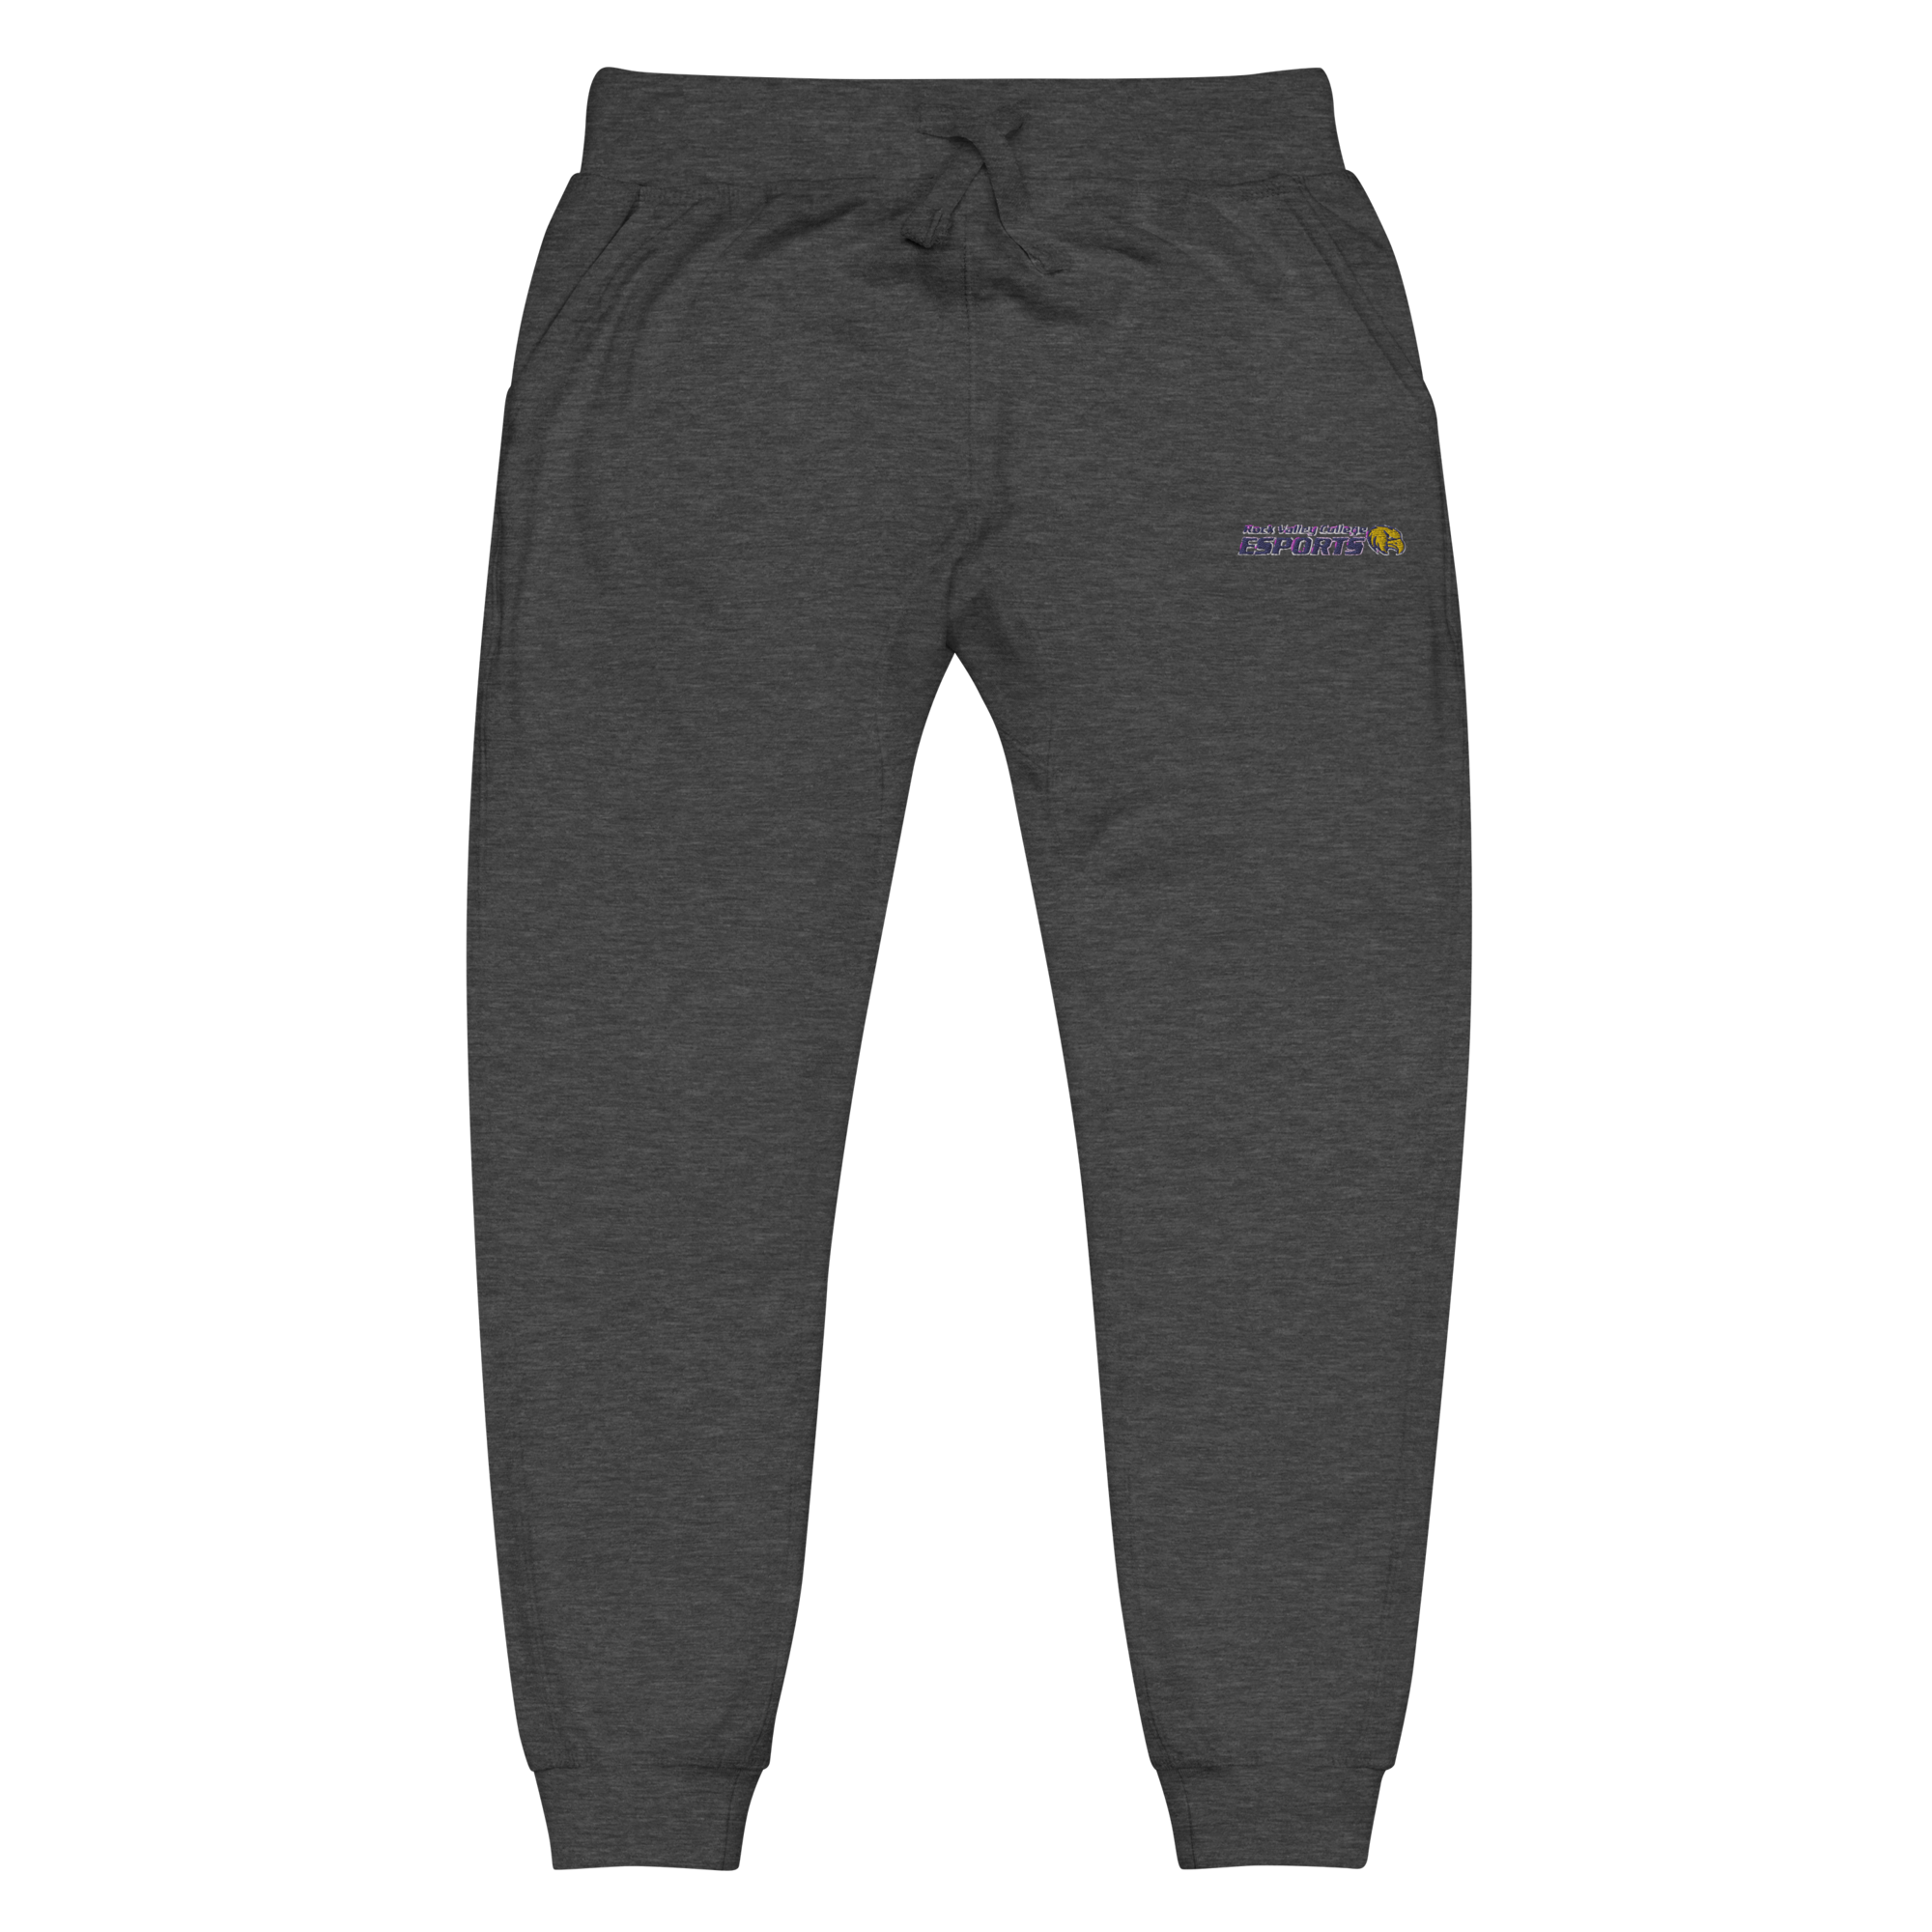 Rock Valley College | On Demand | Embroidered Unisex Fleece Sweatpants